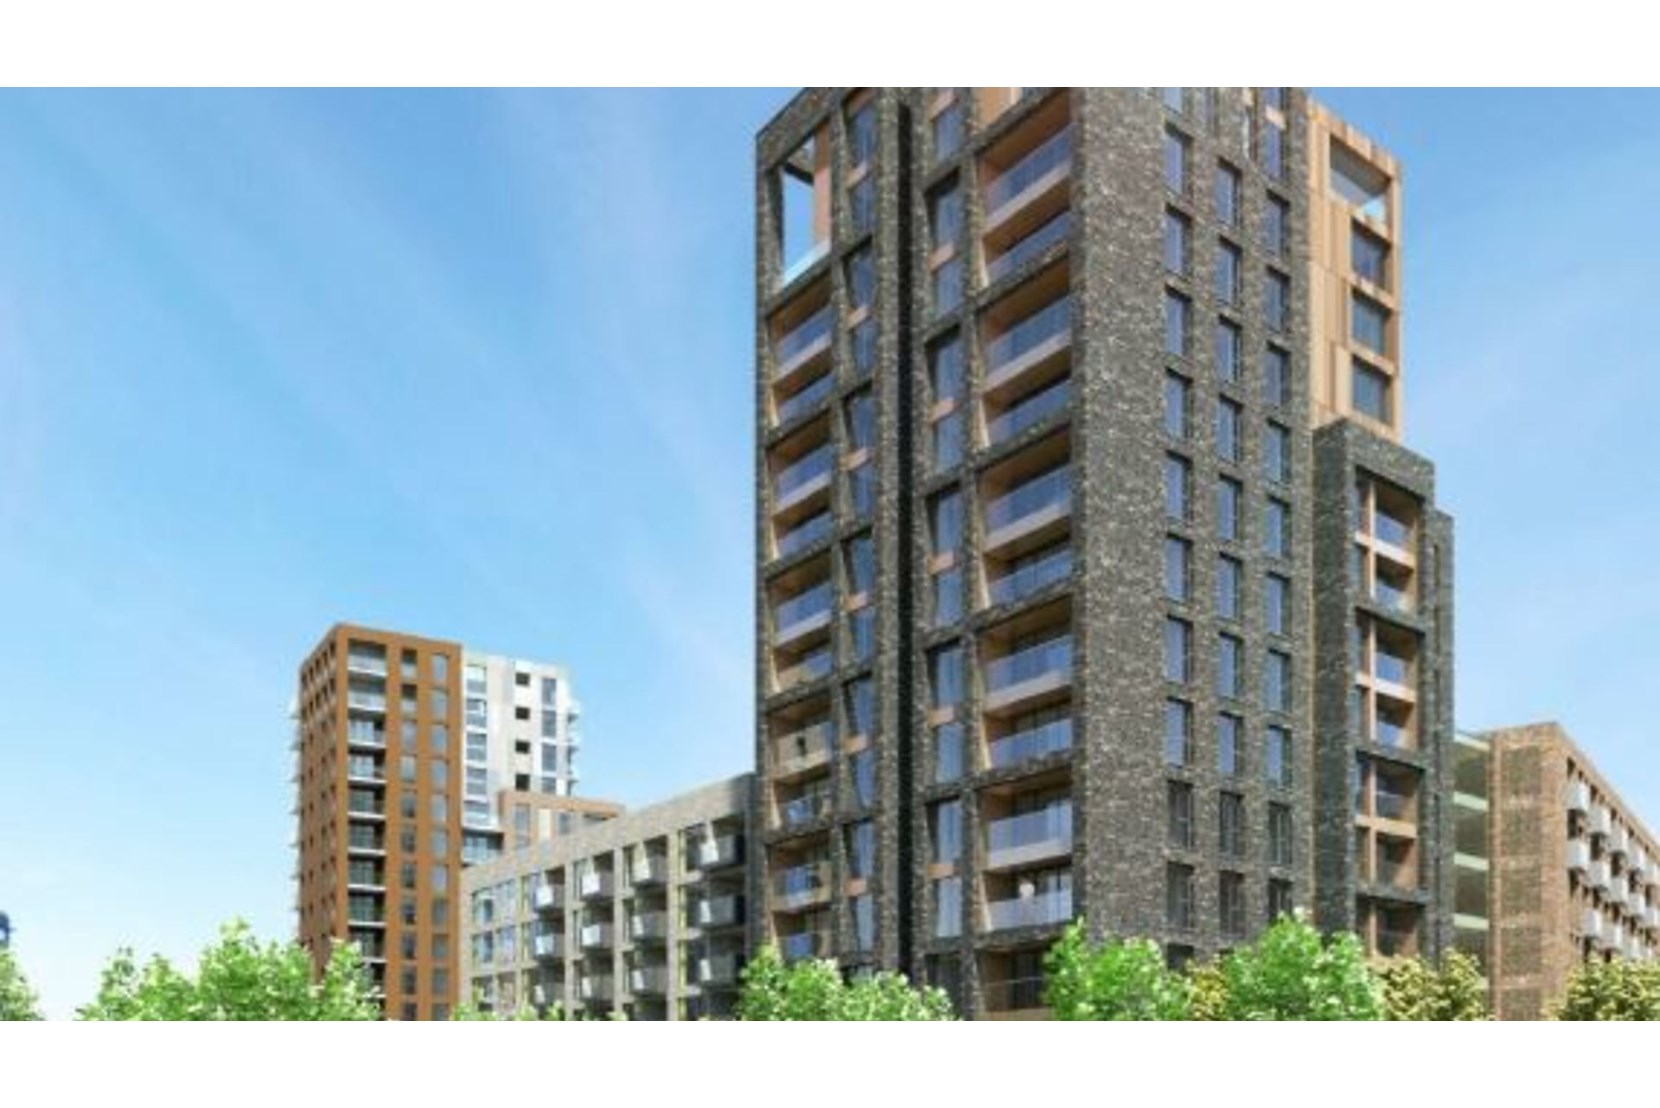 Apartments to Rent by JLL at The Horizon, Lewisham, SE10, development panoramic